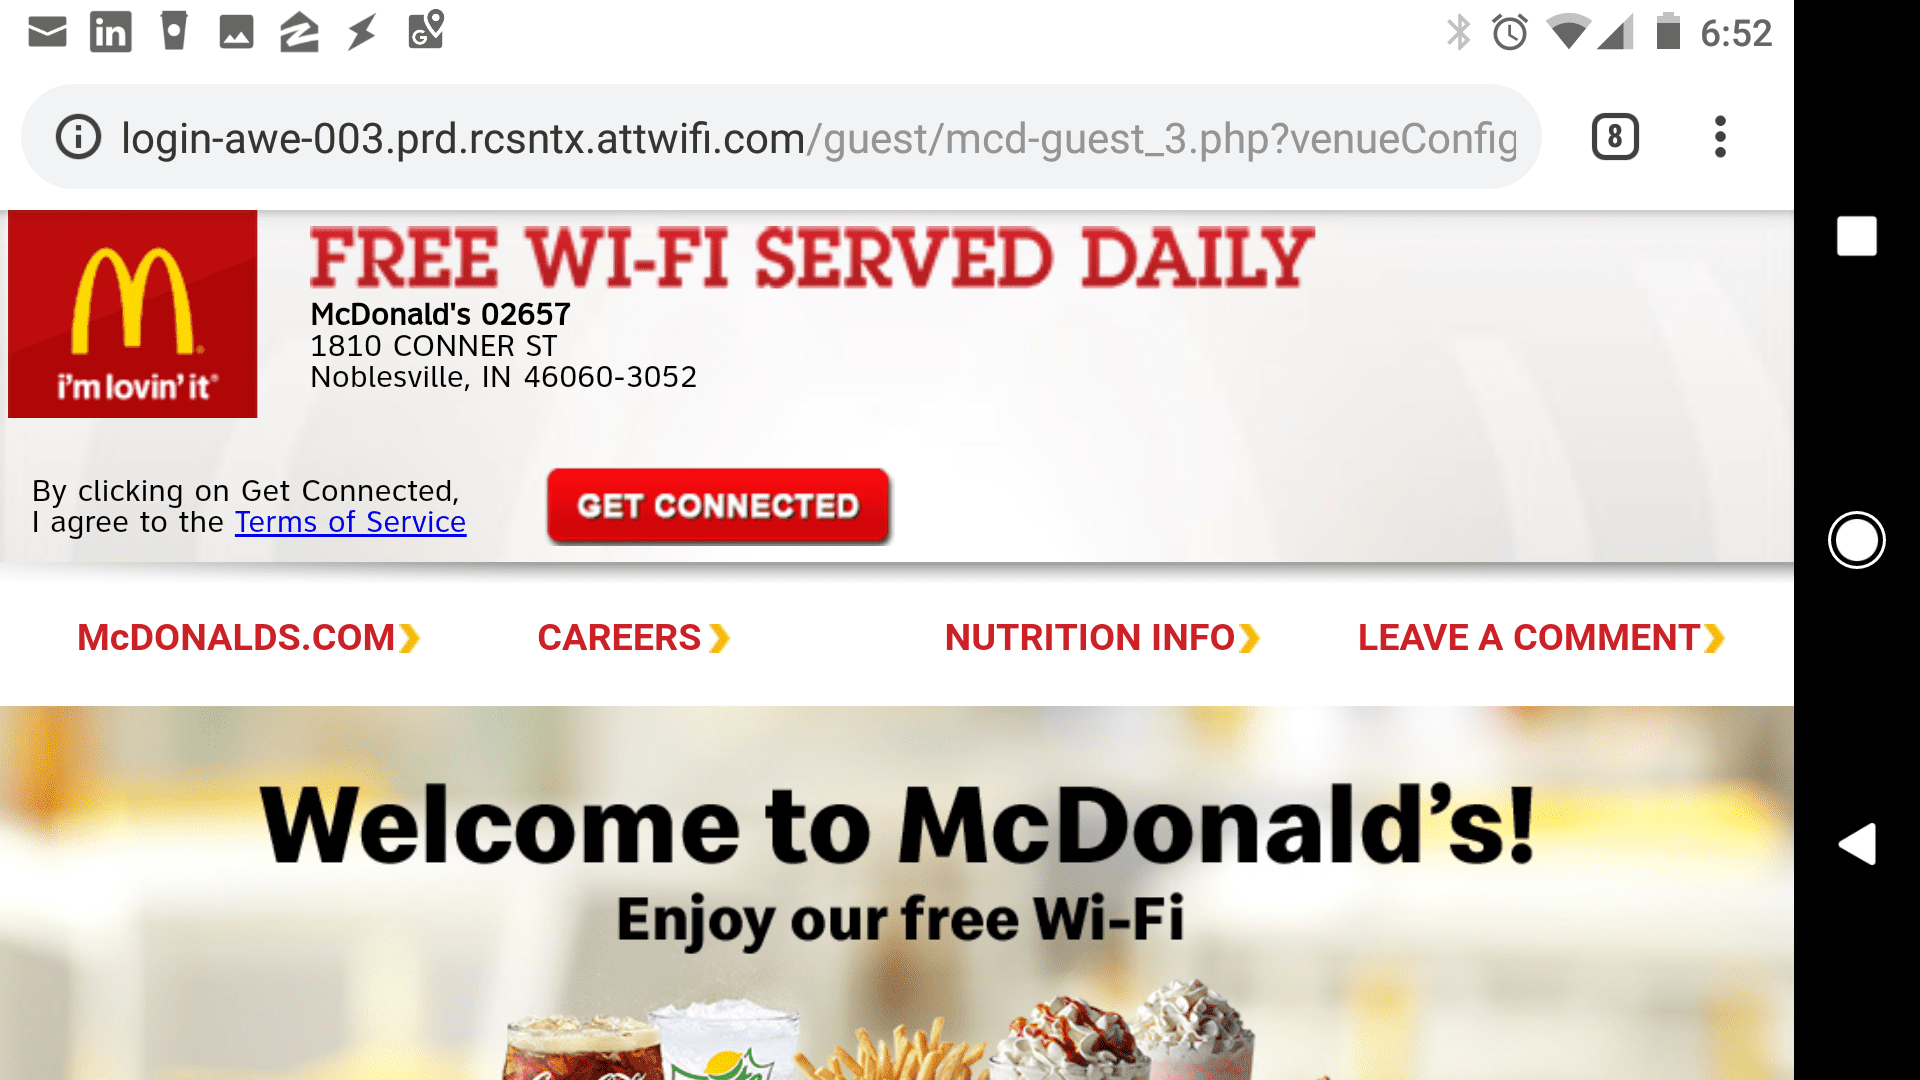 McDonalds mobila Wi-Fi-anslutningssida